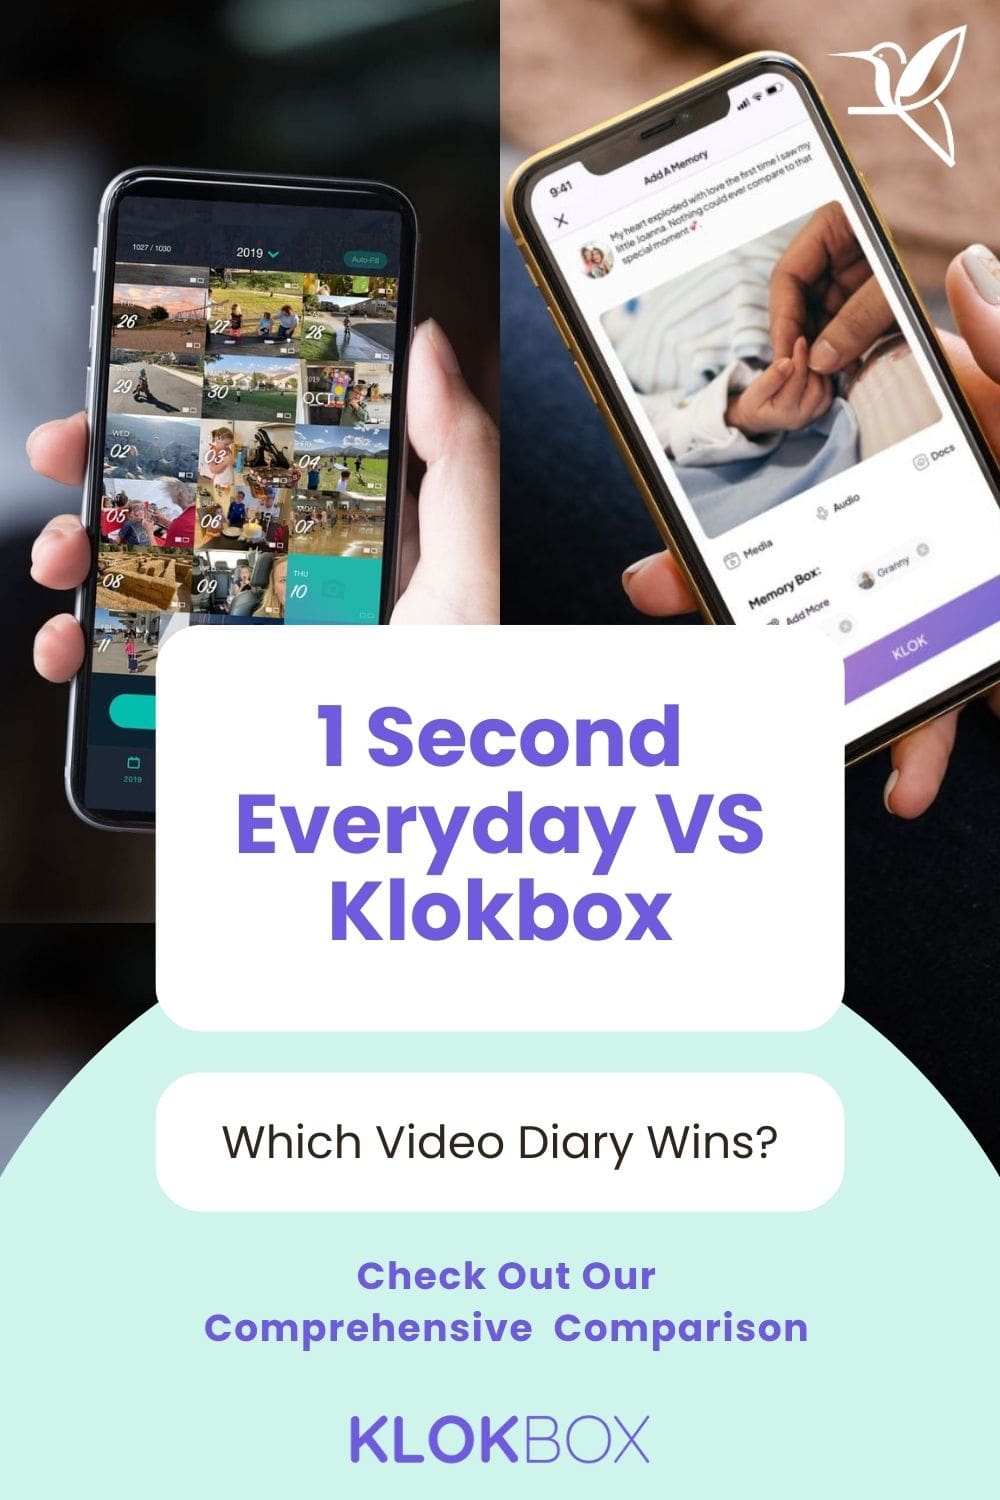 1 Second Everyday VS Klokbox. Which Video Diary Wins